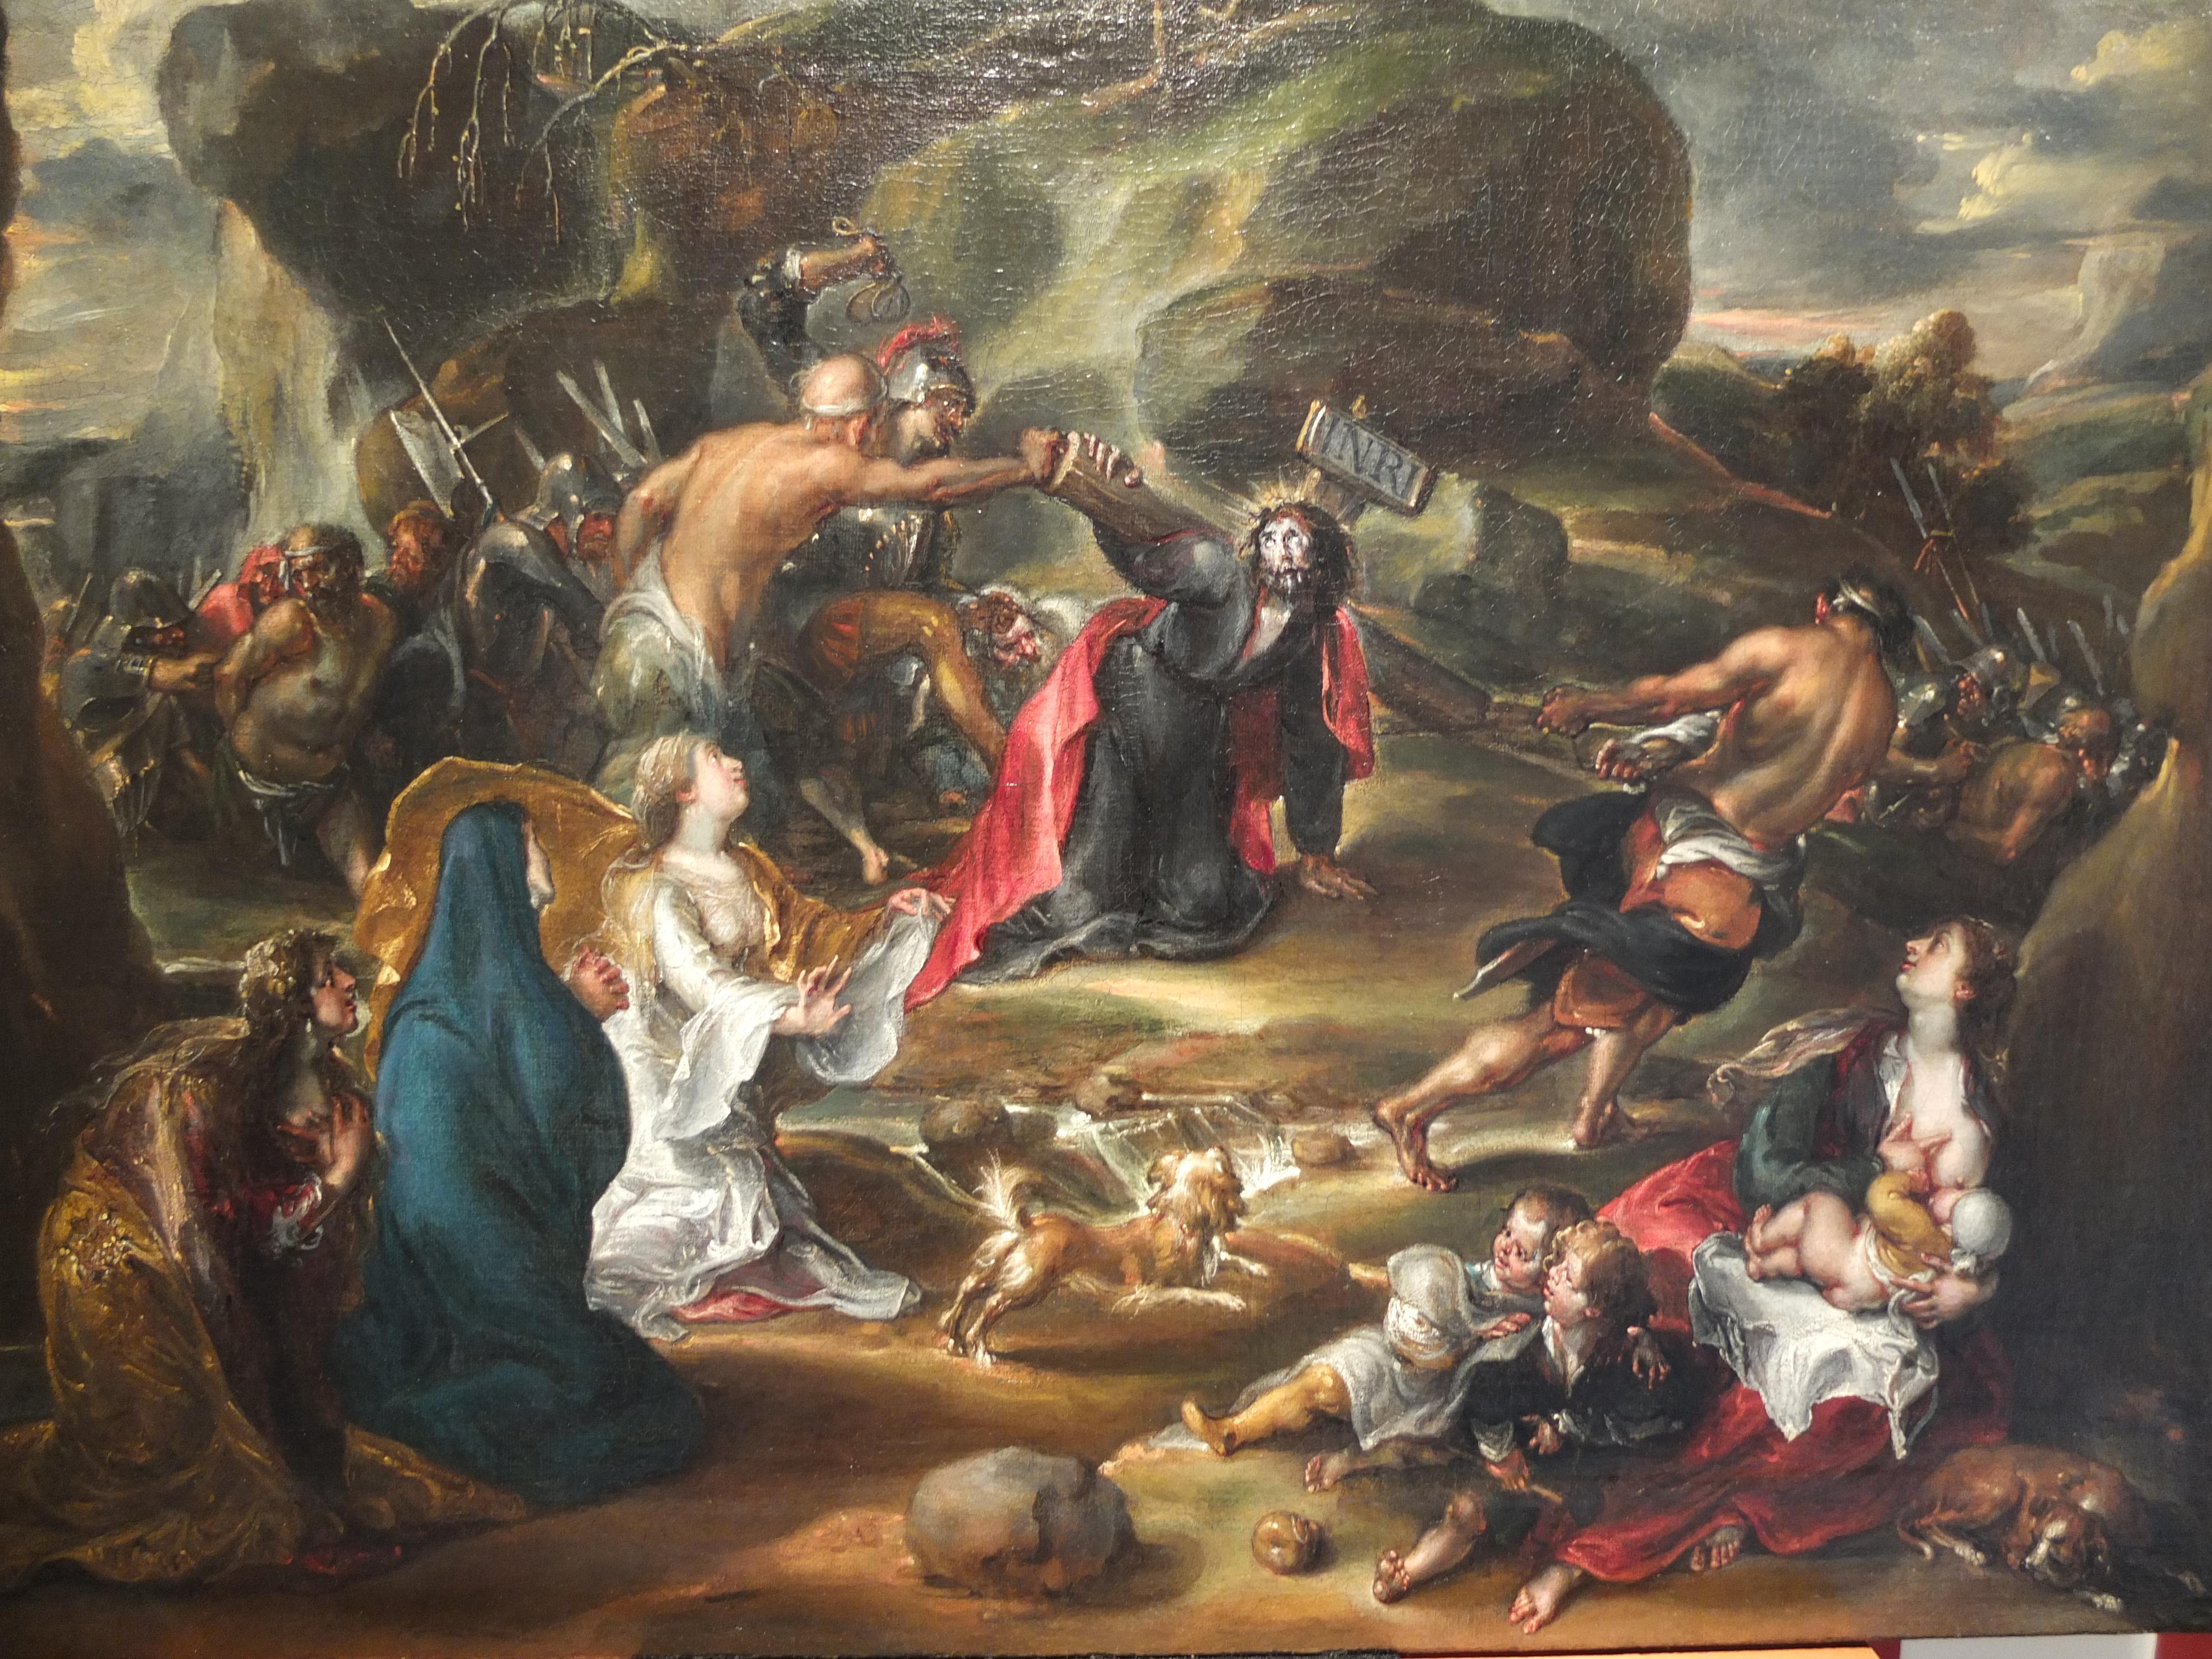 Christ Carrying the Cross, Old Master, Flemish, De Vos, Religious Scene, Rubens - Painting by Simon de Vos